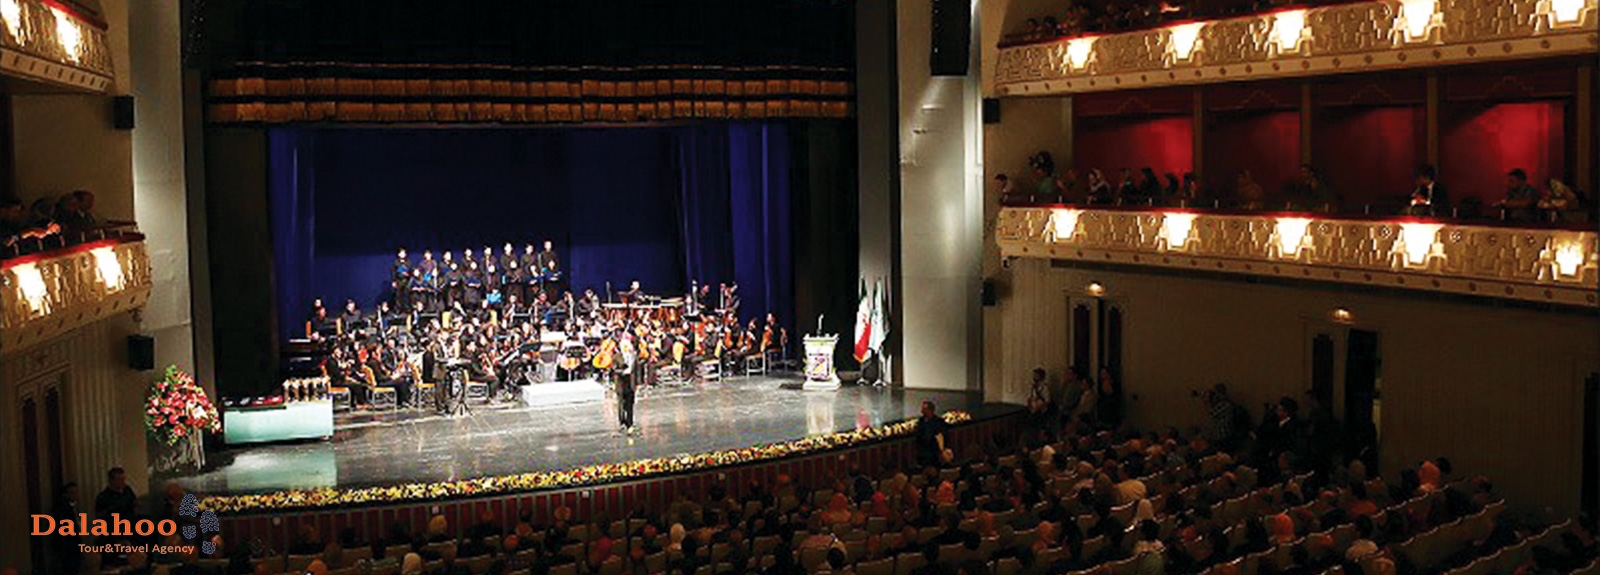 Iran Music (Music performance in Tehran)